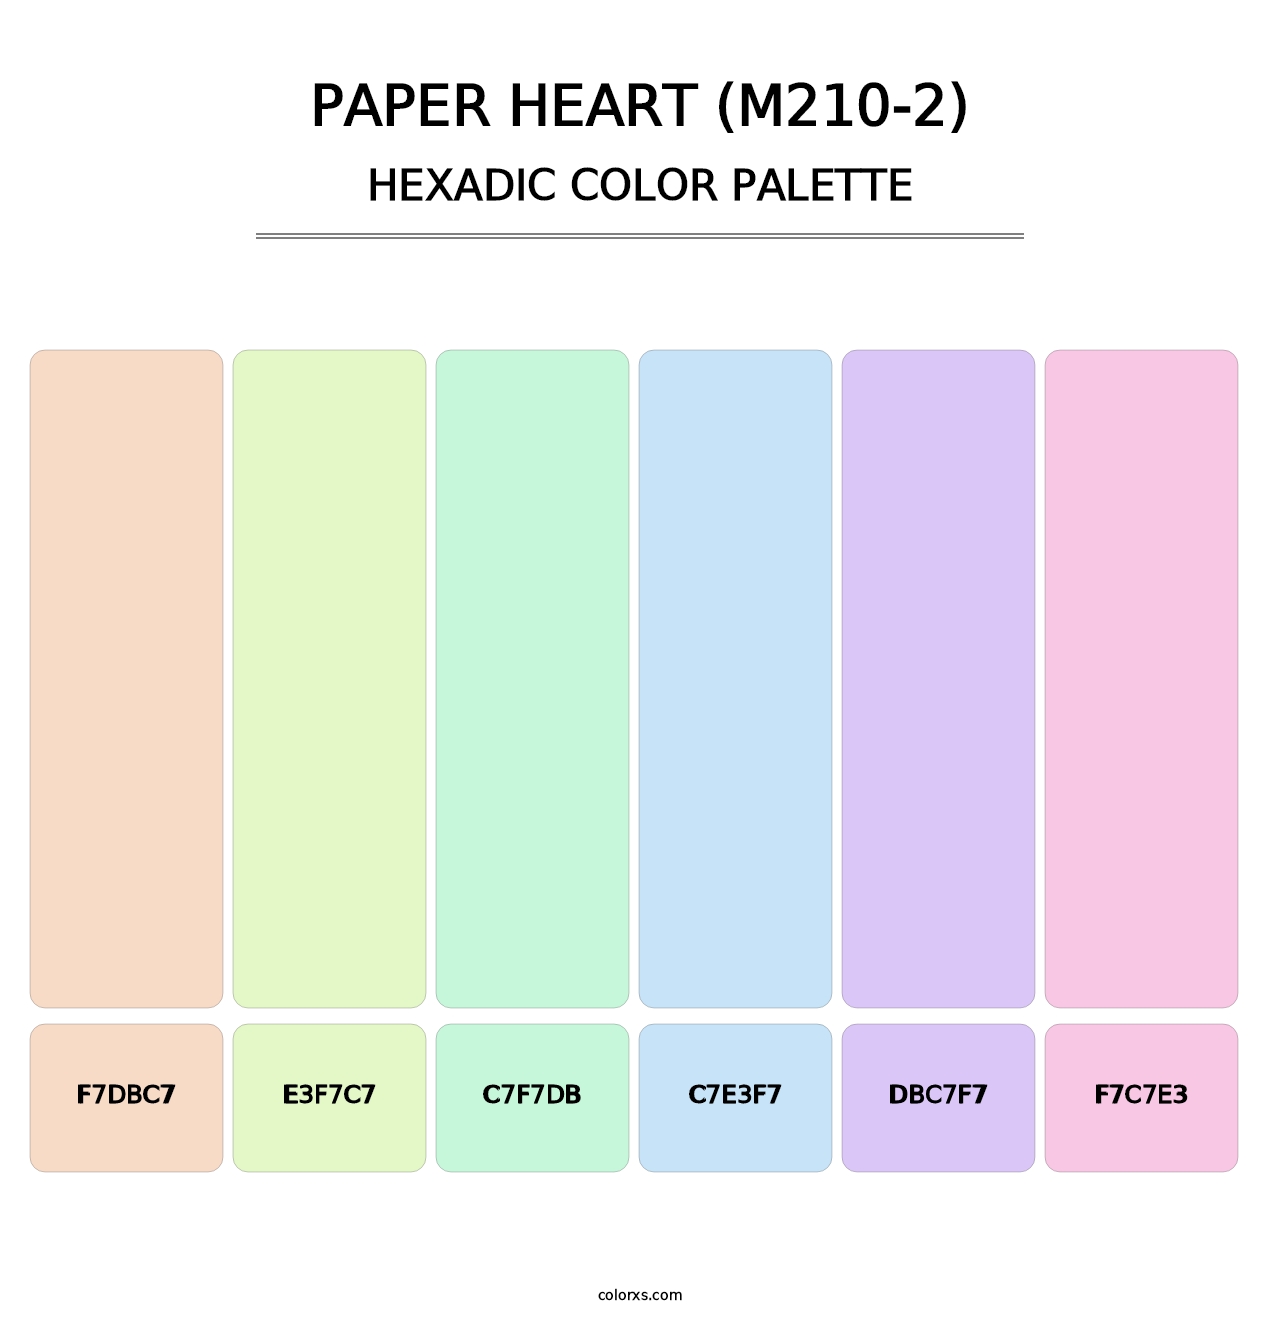 Paper Heart (M210-2) - Hexadic Color Palette